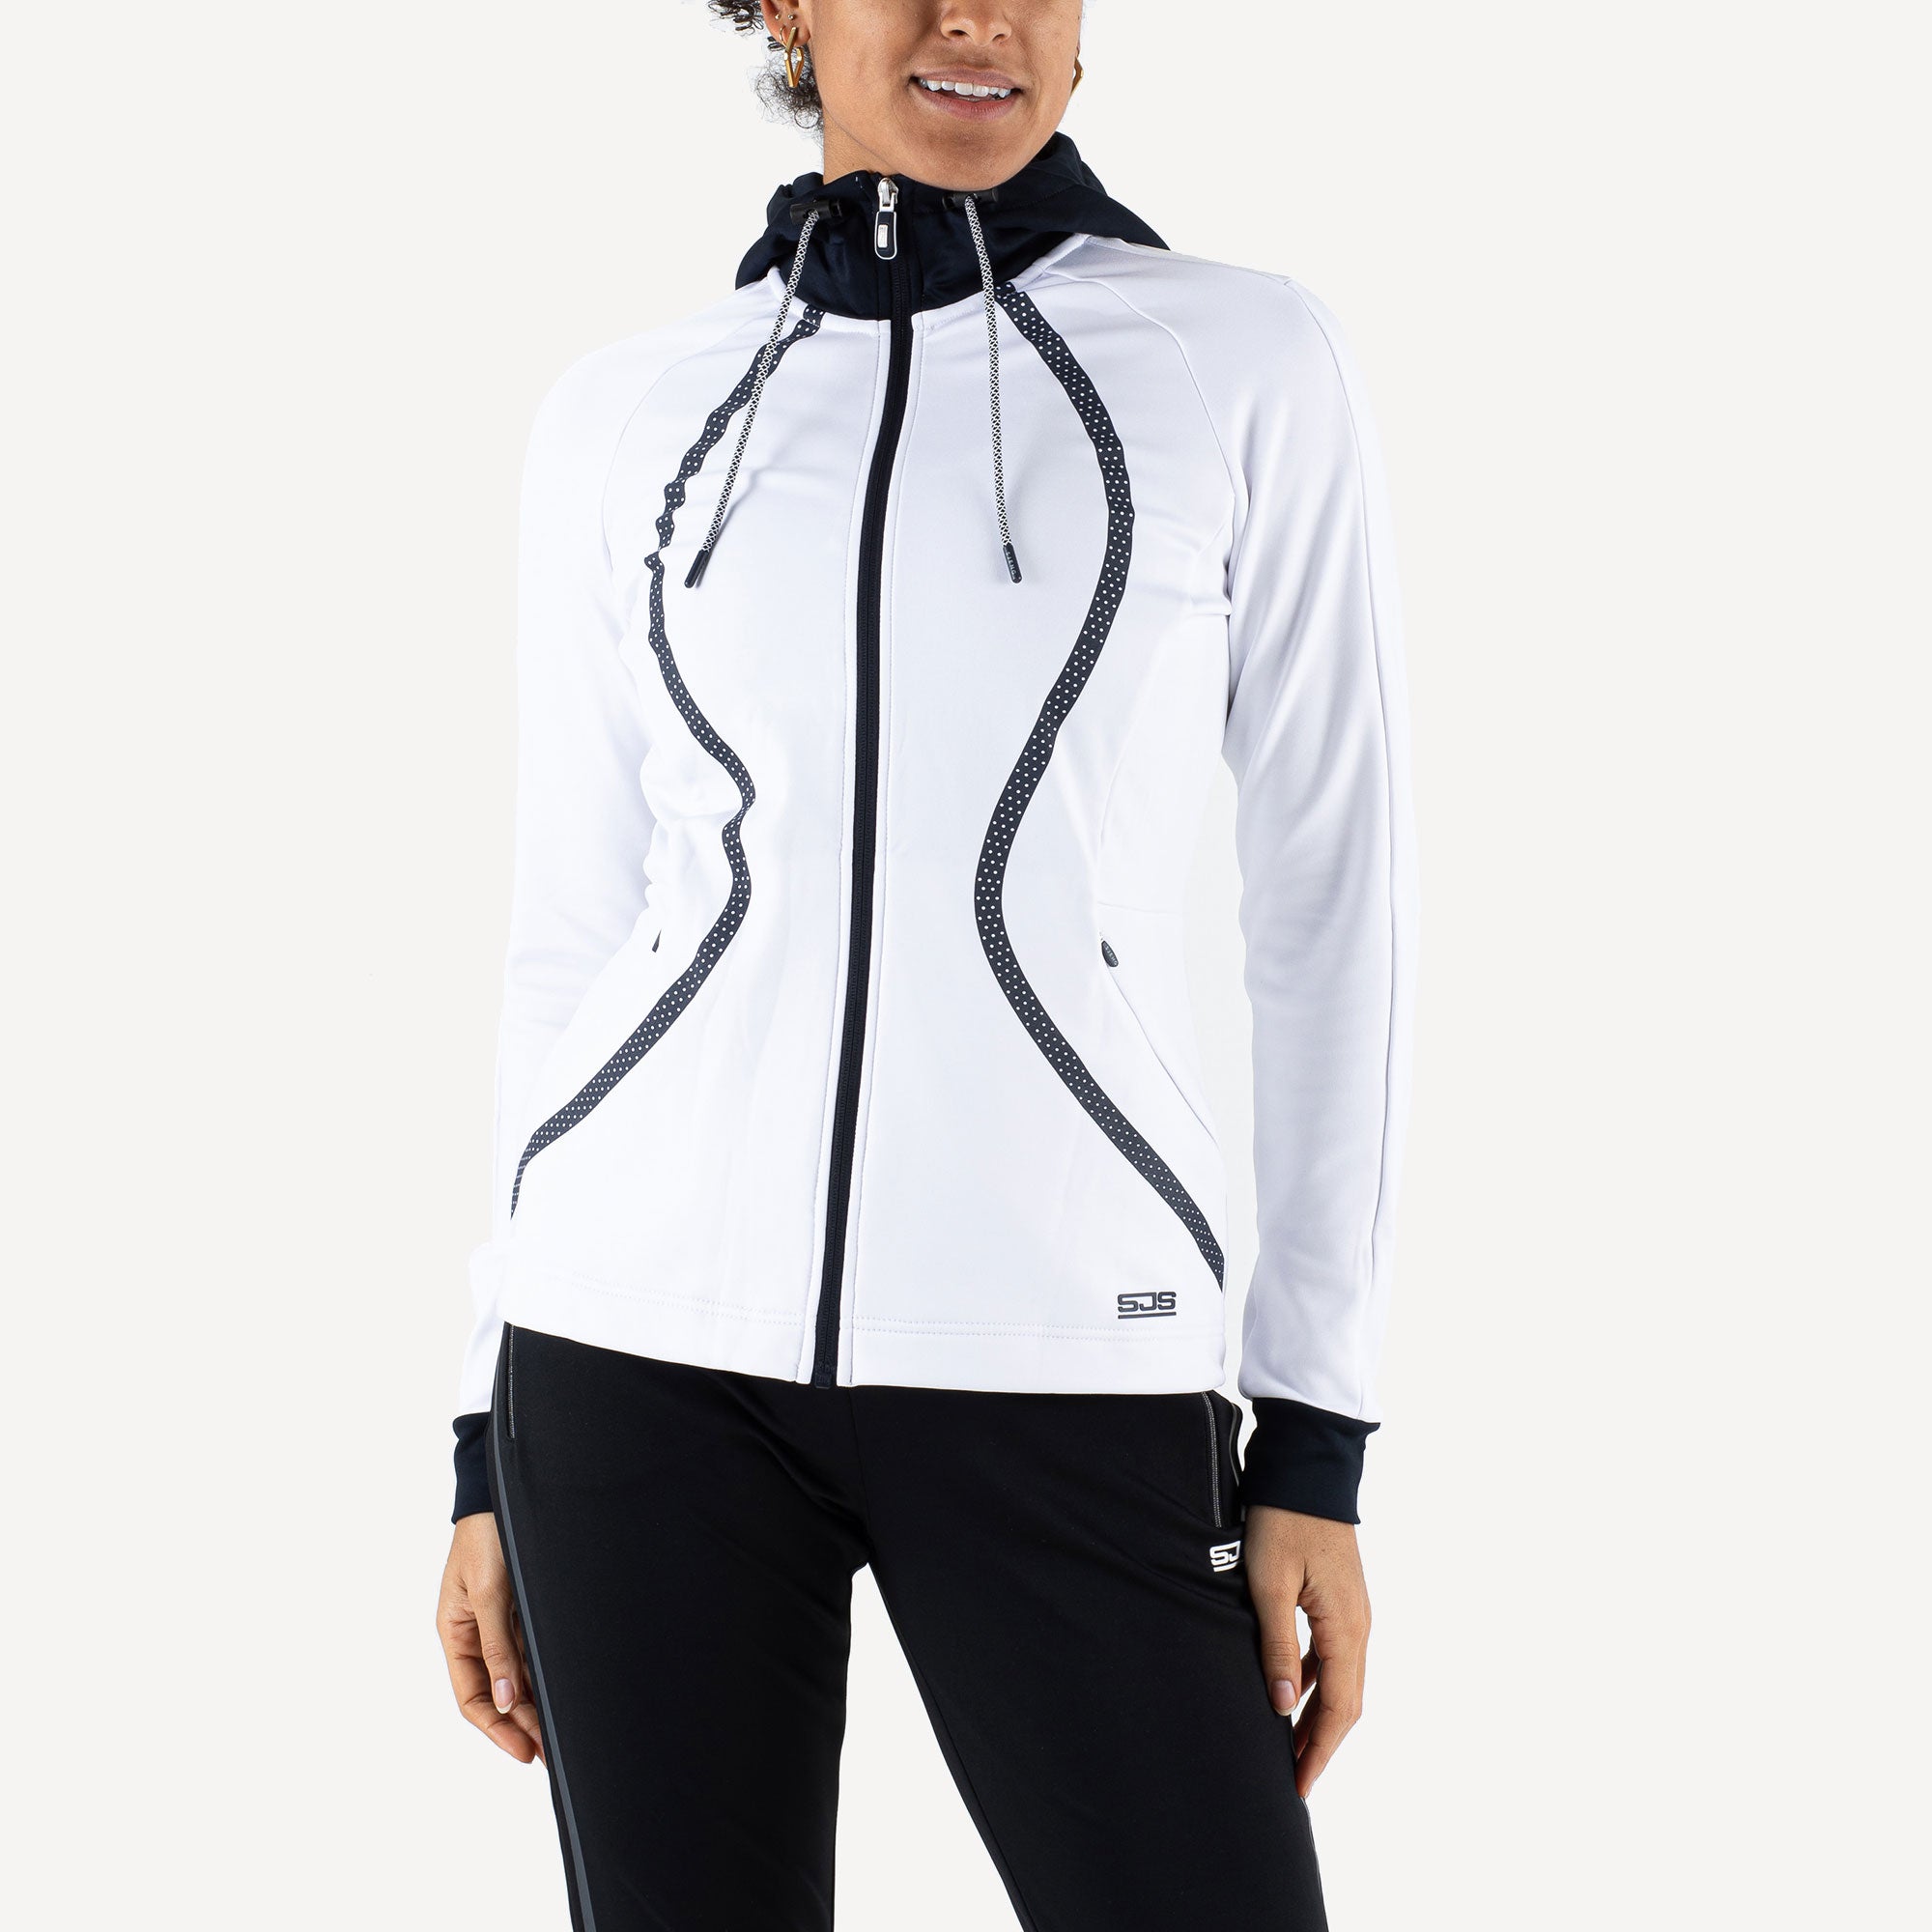 Sjeng Sports Giolla Women's Hooded Tennis Jacket White (1)